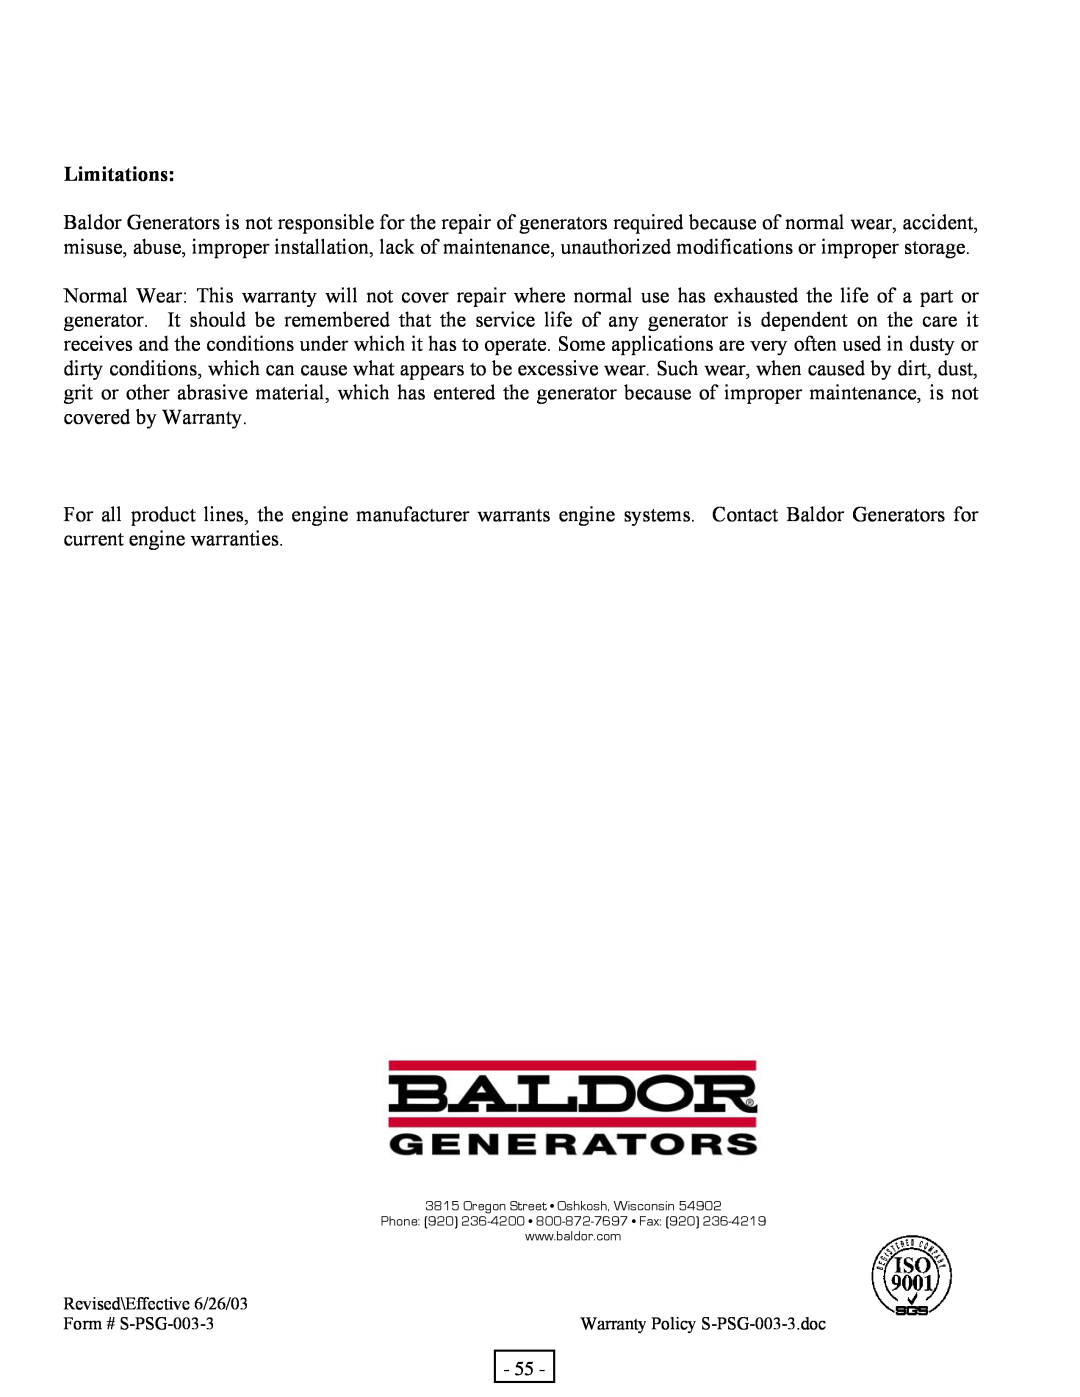 Baldor BALDOR GENERATOR, PC13R manual Limitations, Oregon Street Oshkosh, Wisconsin, Phone 920 236-4200 800-872-7697 Fax 920 